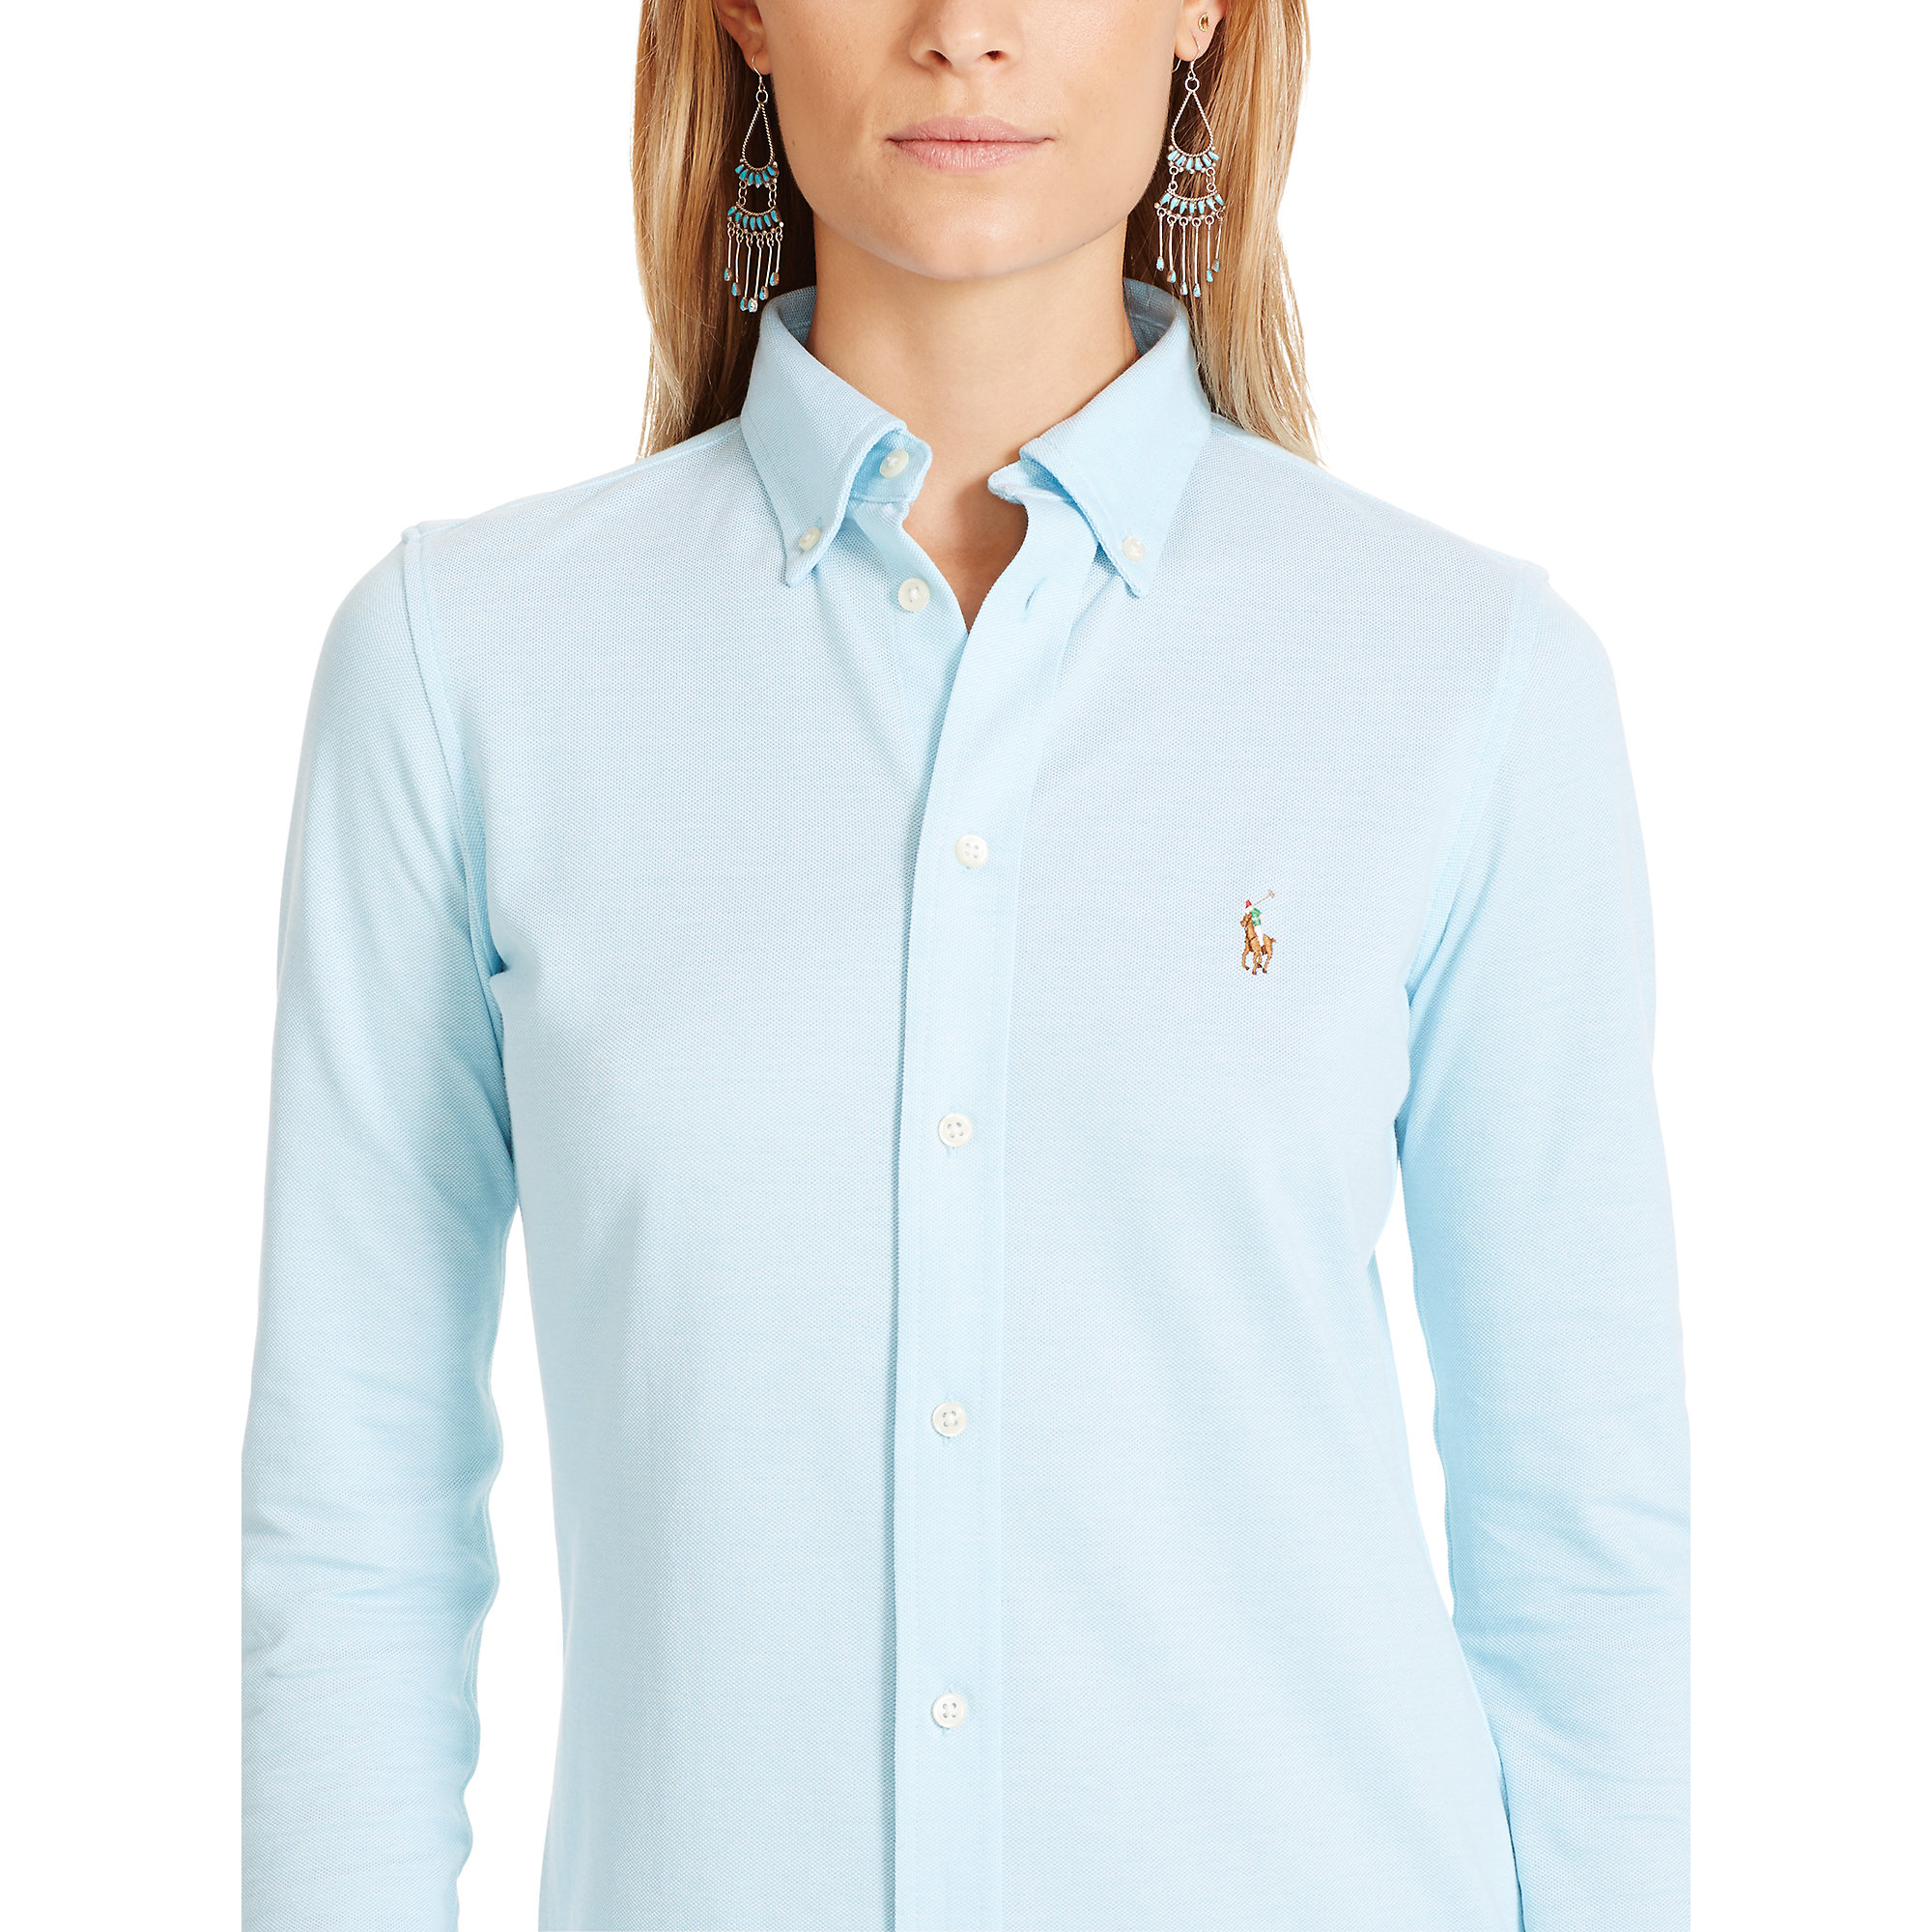 Lyst - Polo Ralph Lauren Knit Oxford Shirt in Blue